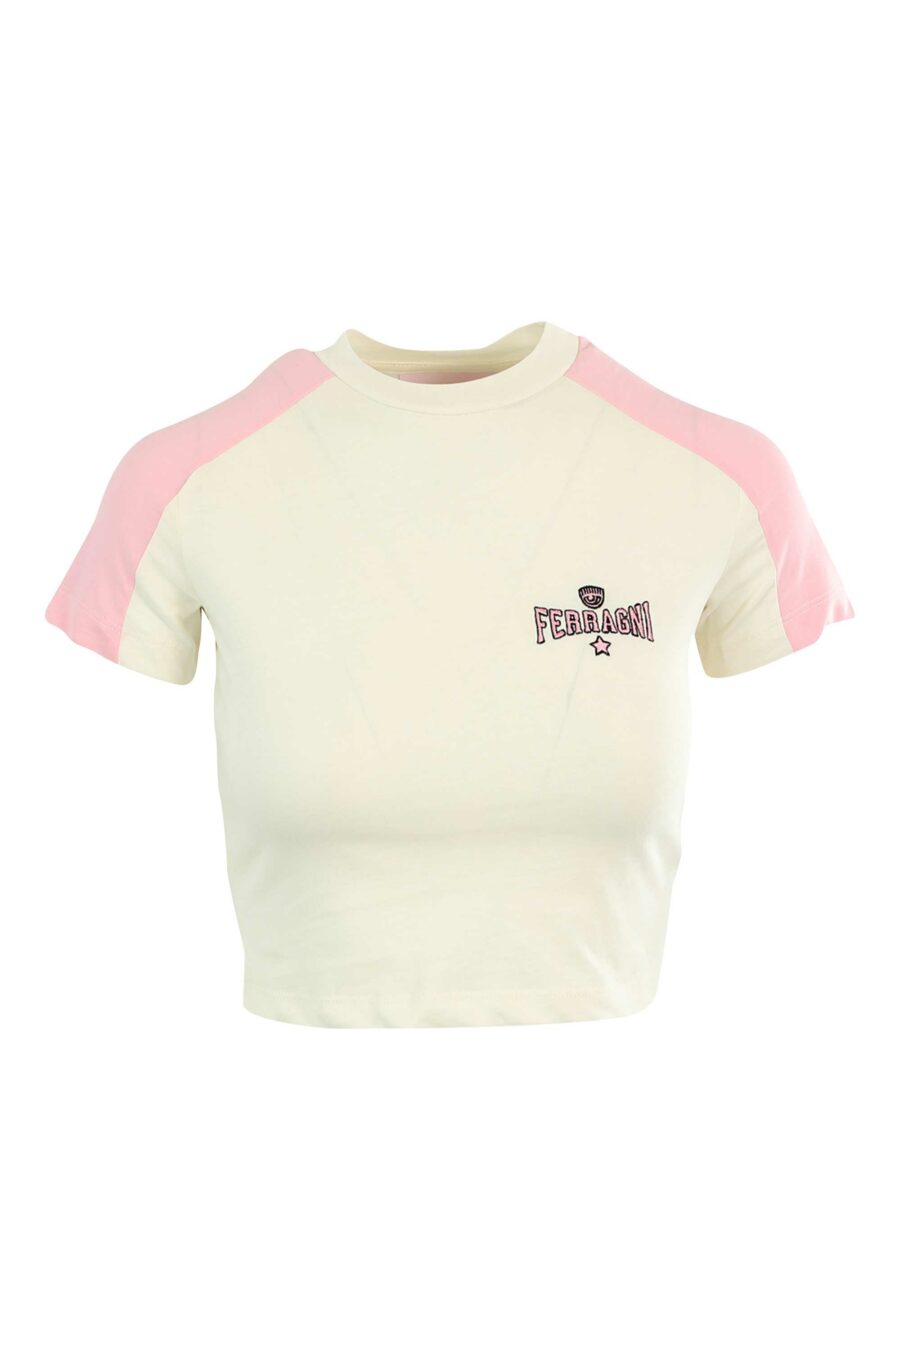 Camiseta blanca con minilogo rosa "ferragni" - 8052672415974